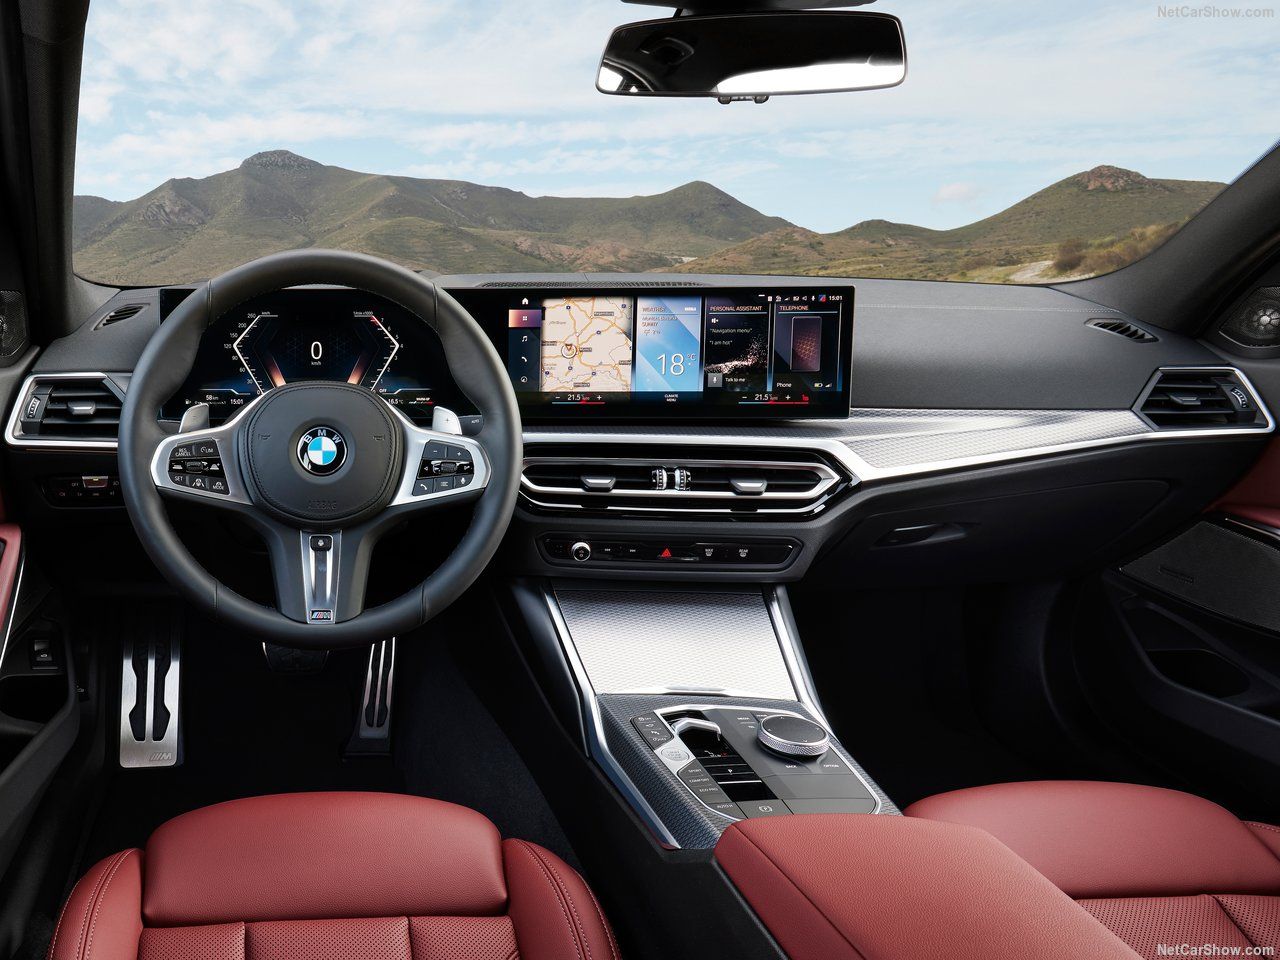 BMW Serie 3 restyling, svetta il Curved Display